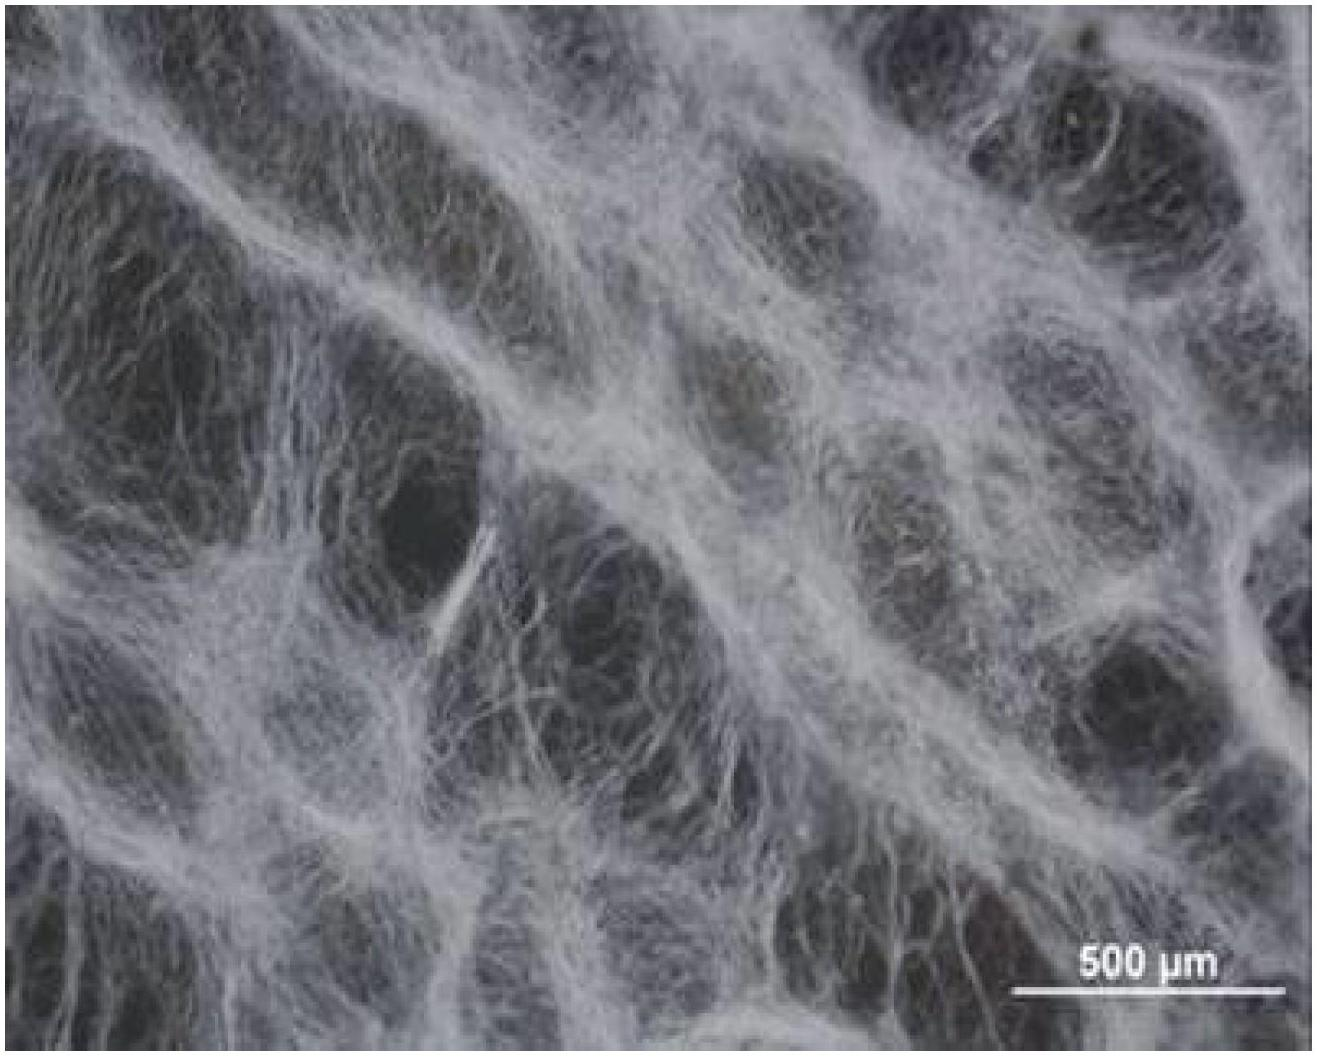 Method for preparing patterning nanofiber membrane by utilizing insulating receiving template static spinning